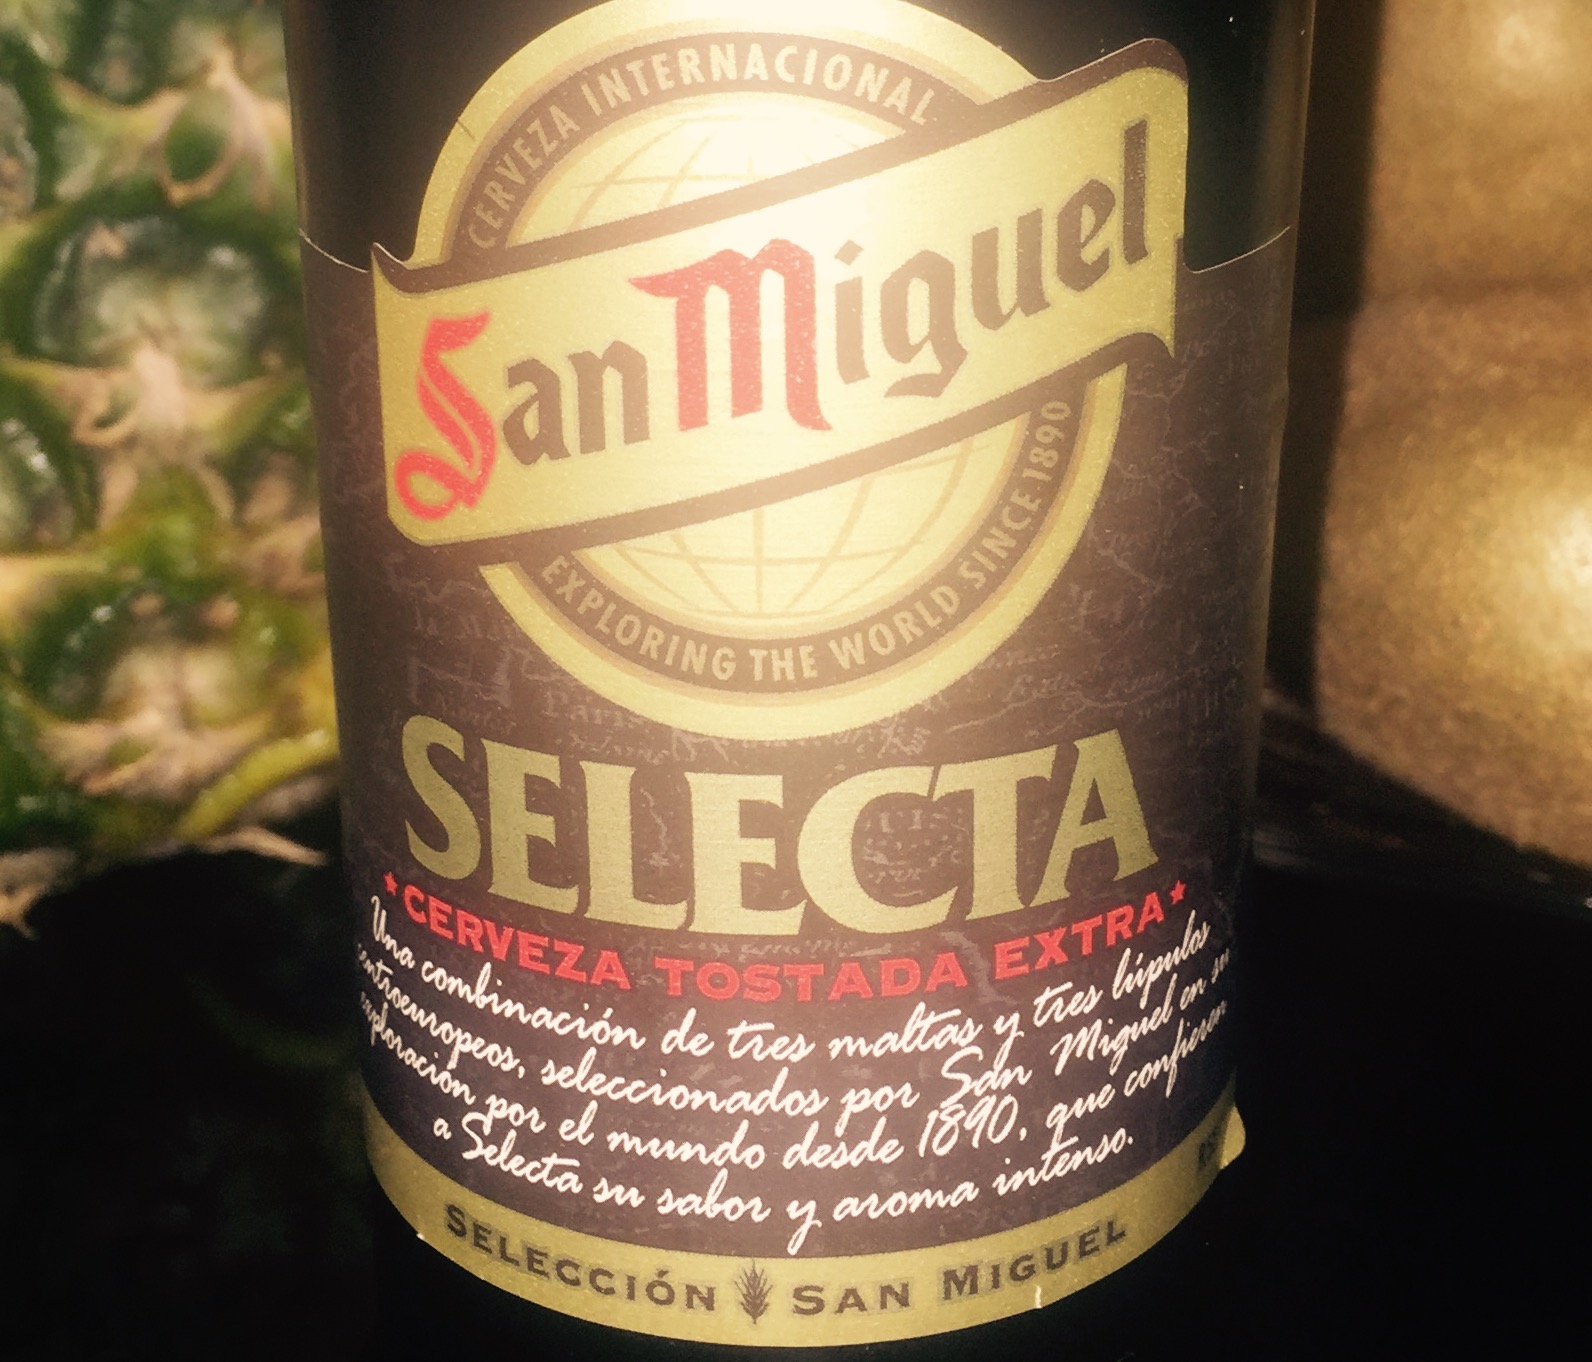 San Miguel - Selecta